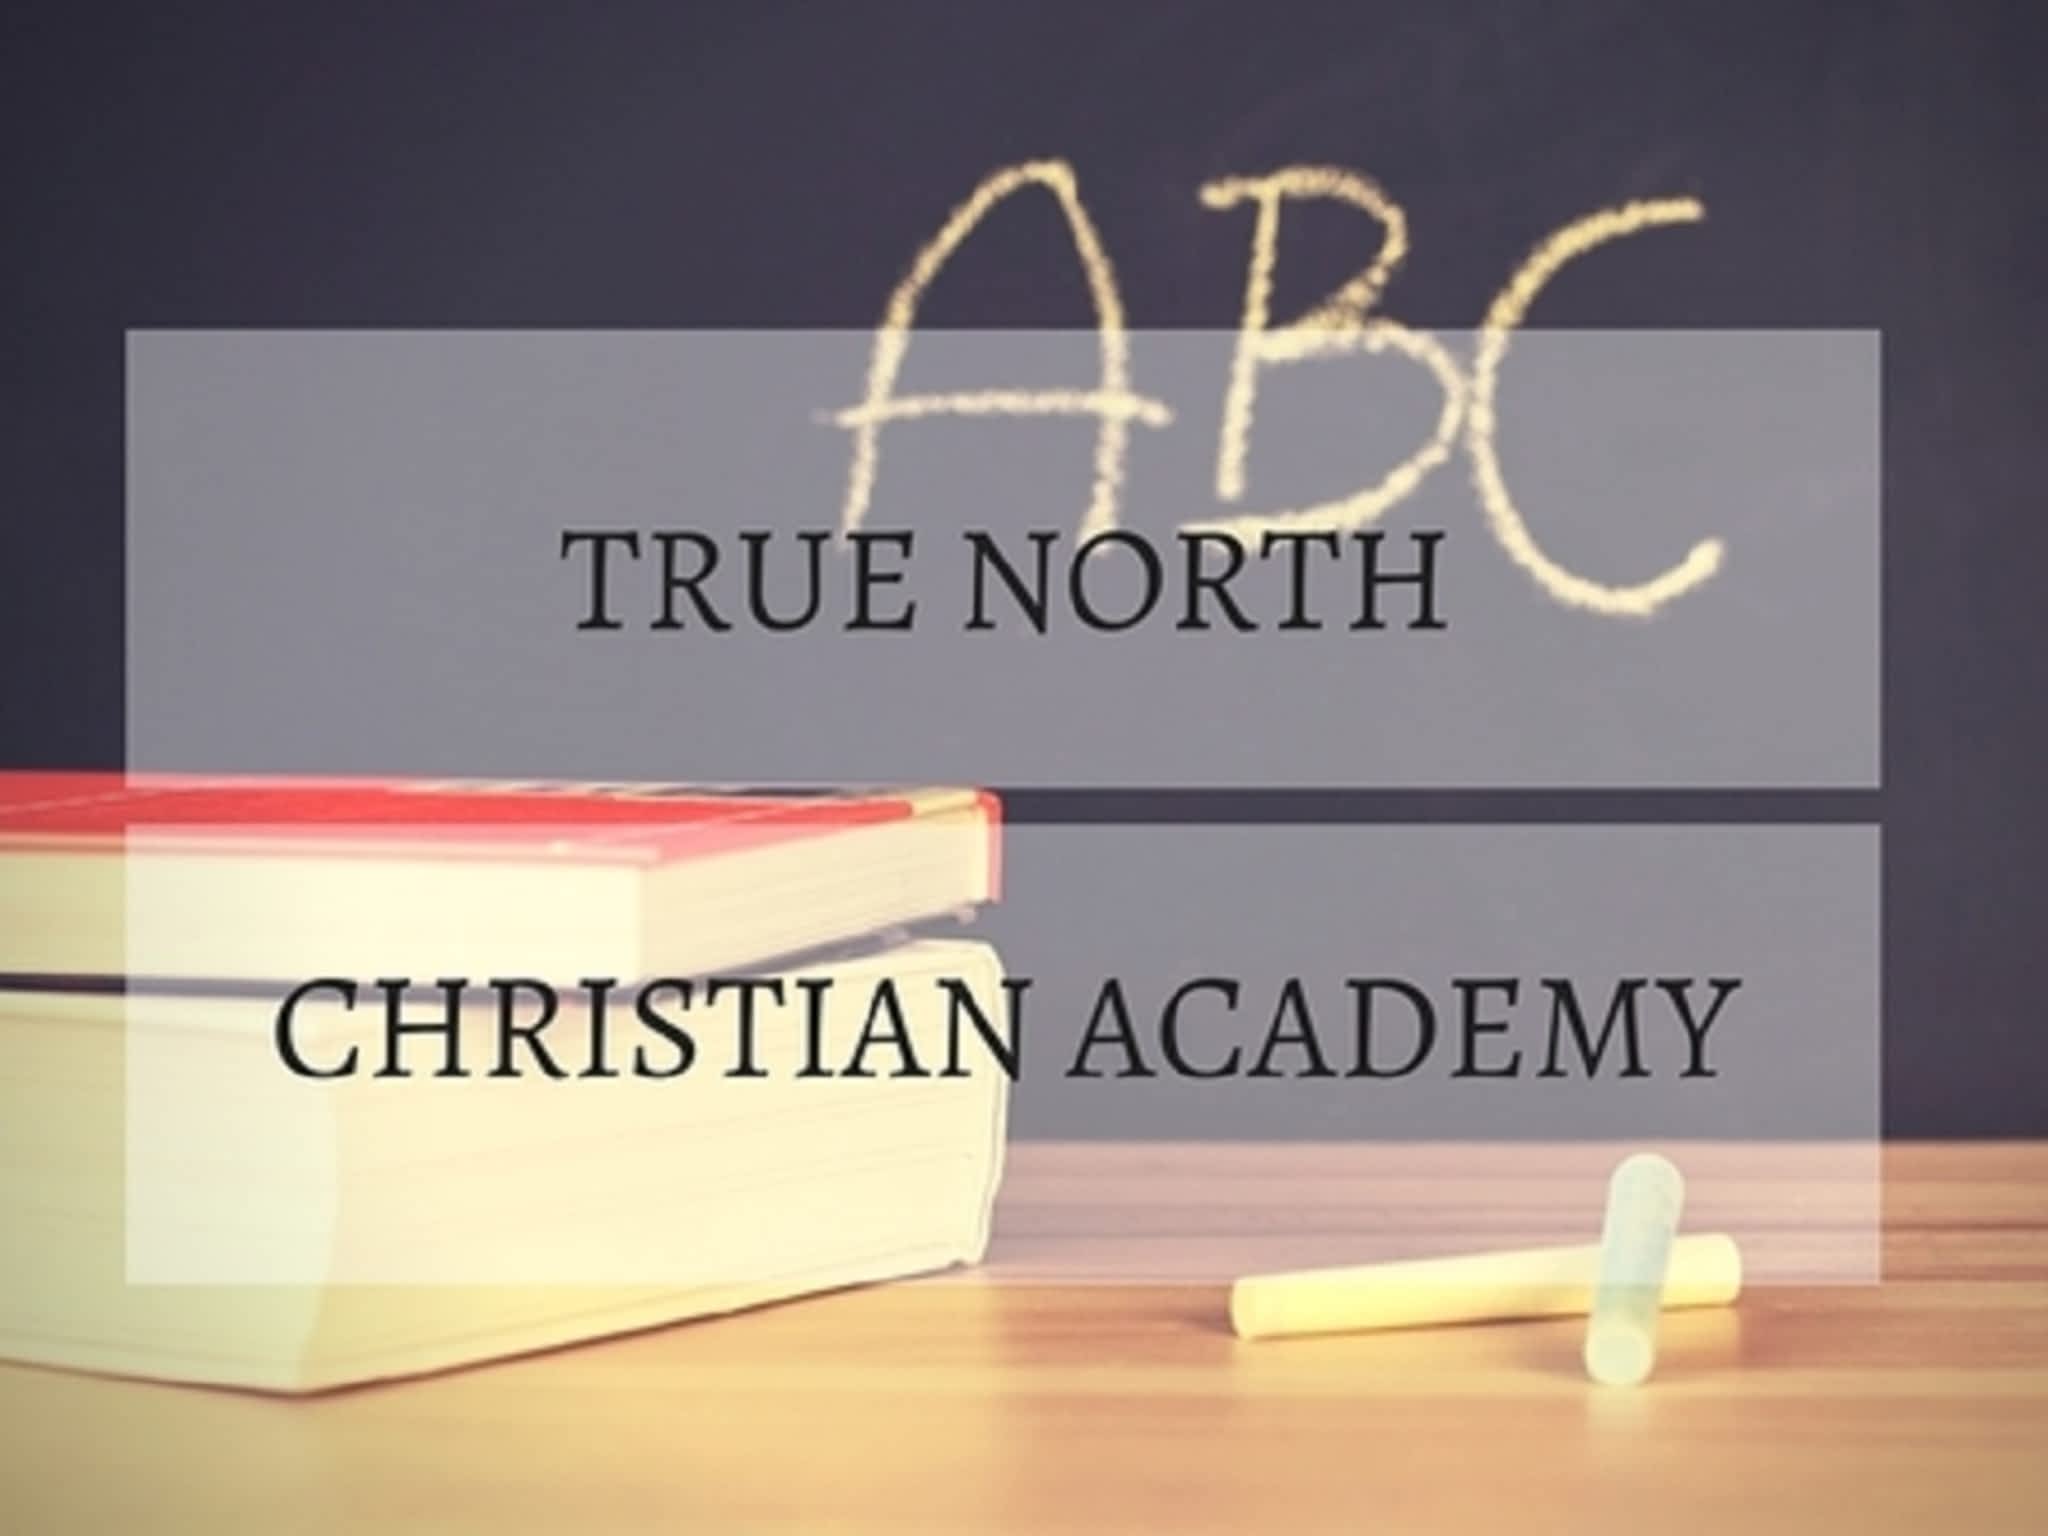 photo Dryden Full Gospel Church & True North Christian Academy